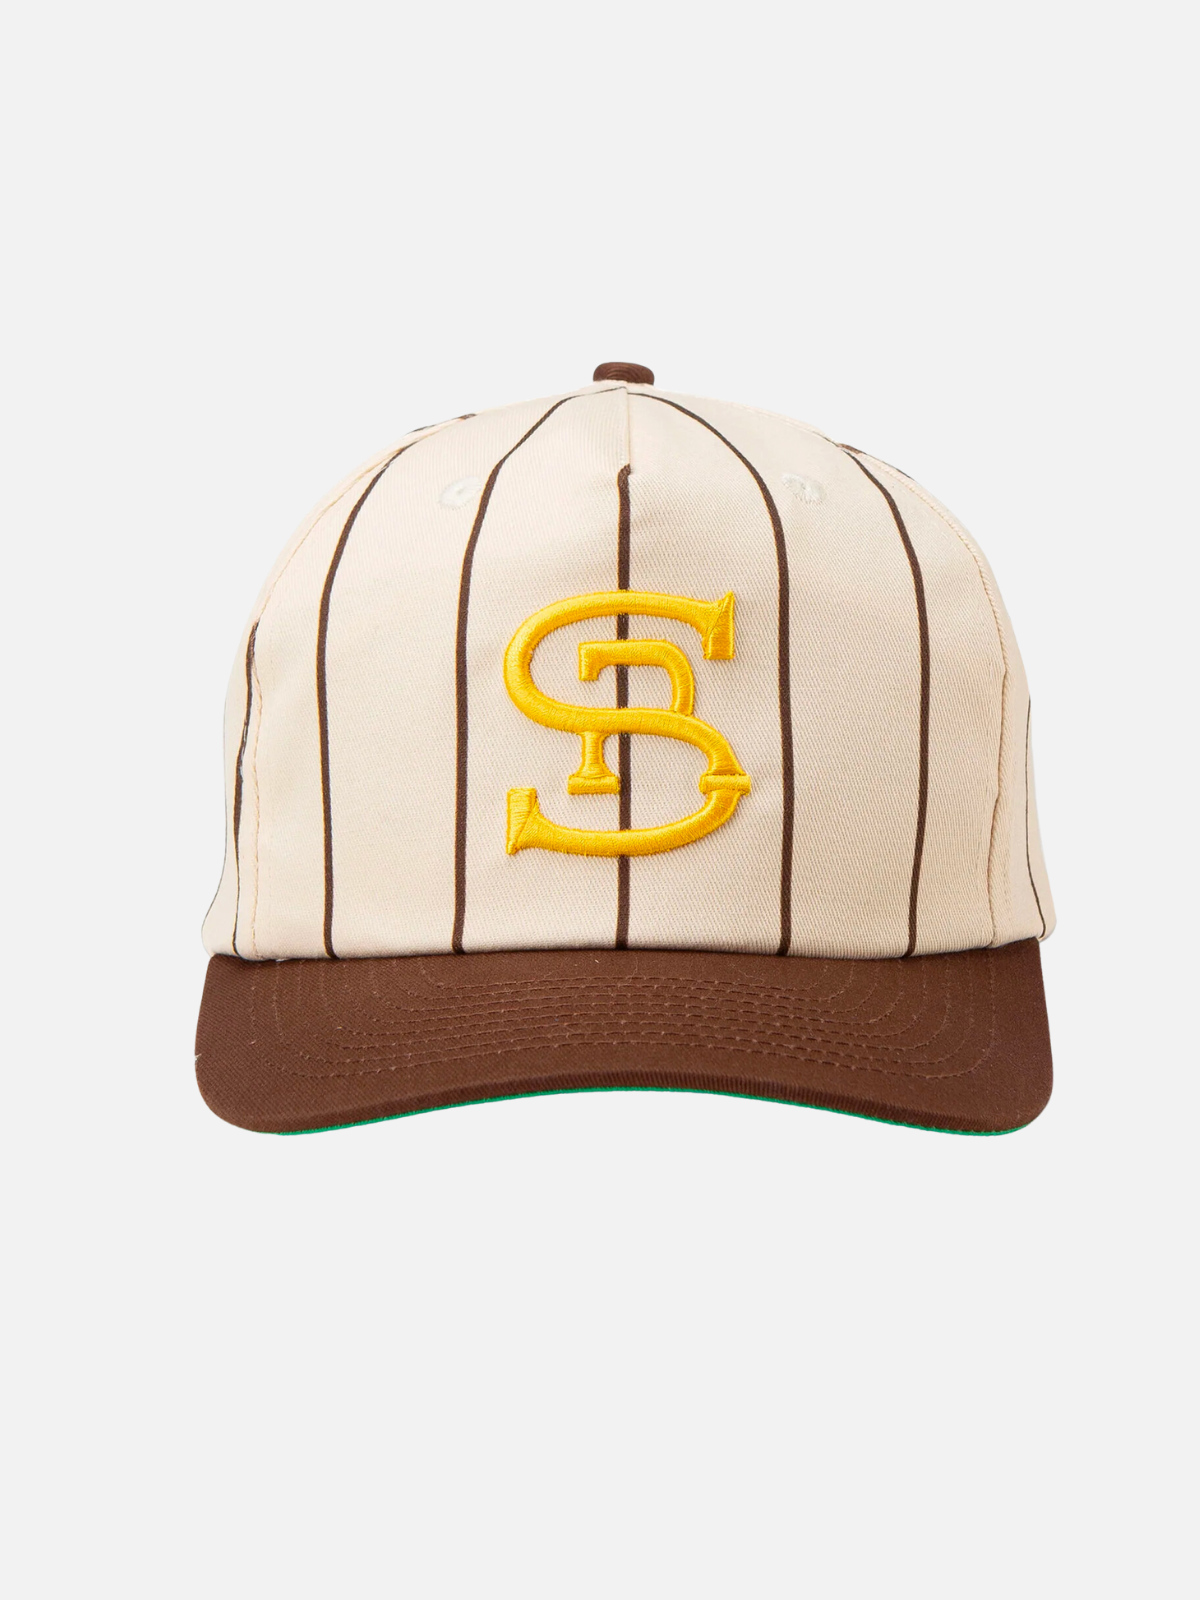 seager brand logo pinstripe snapback brown cream tan yellow gold high profile cotton baseball cap hat kempt athens ga georgia men's clothing store